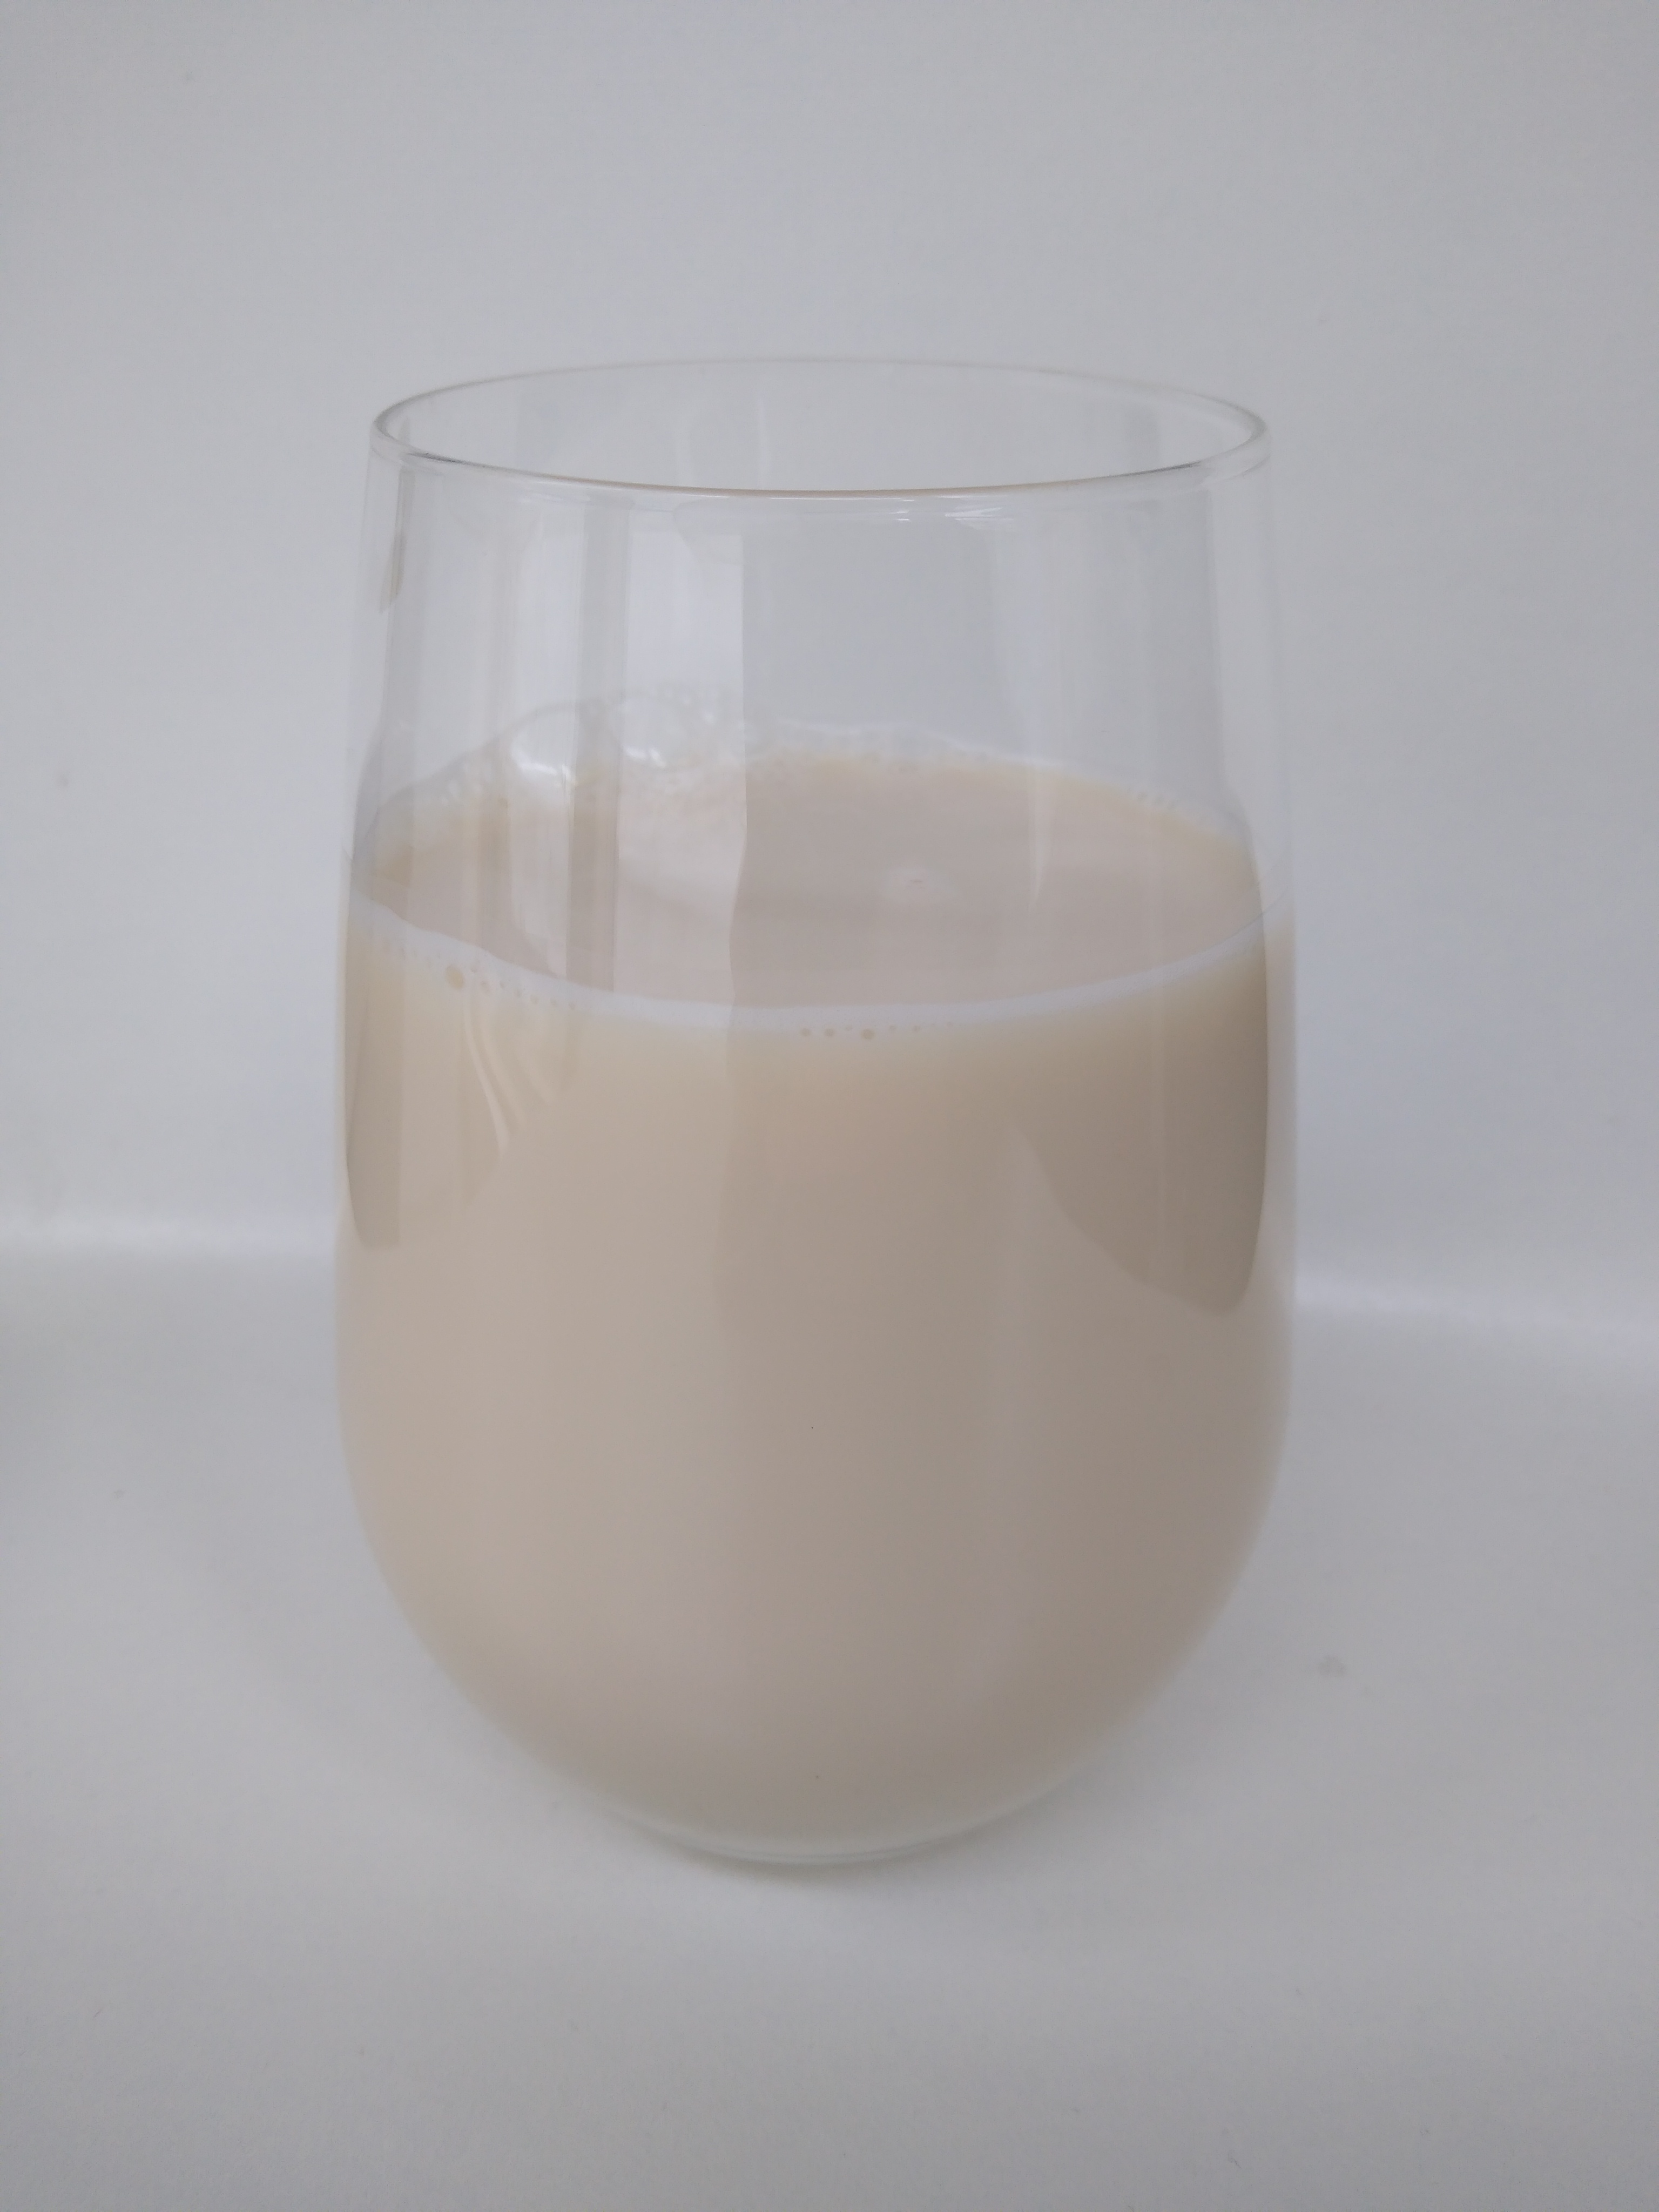 File:Milk glass.jpg - Wikipedia